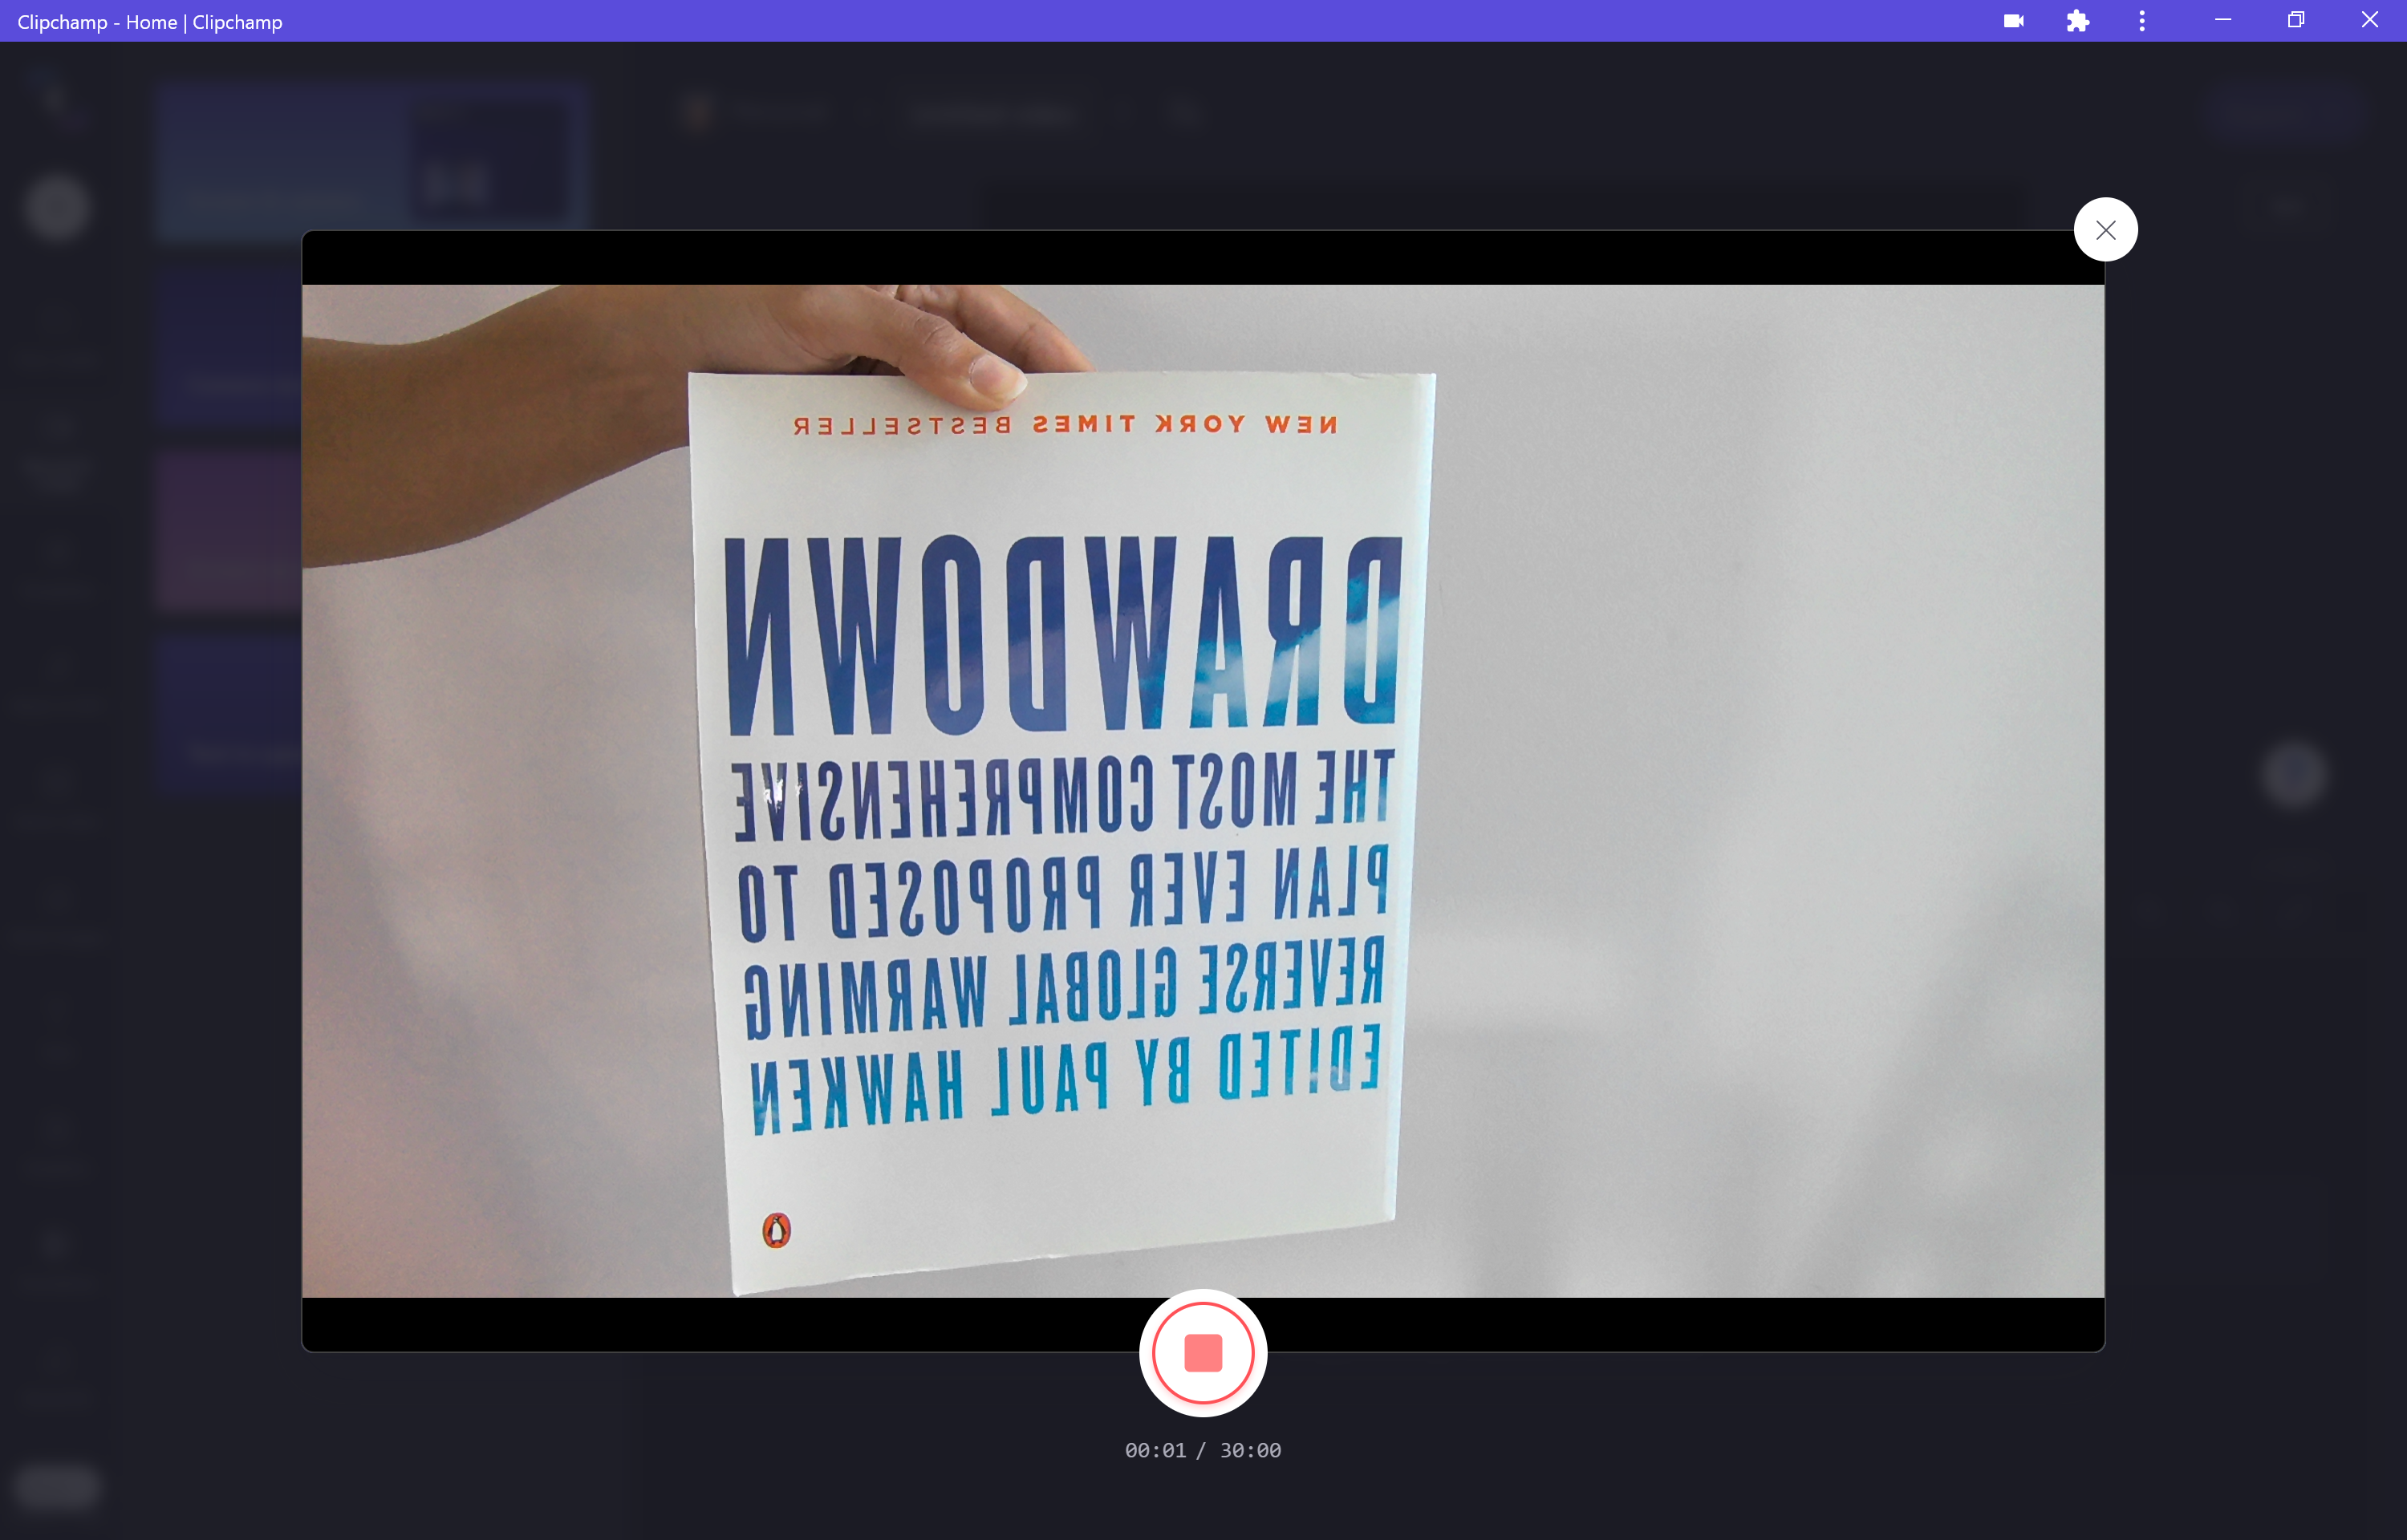 Gambar pratinjau perekam webcam Clipchamp memperlihatkan teks dari kanan ke kiri